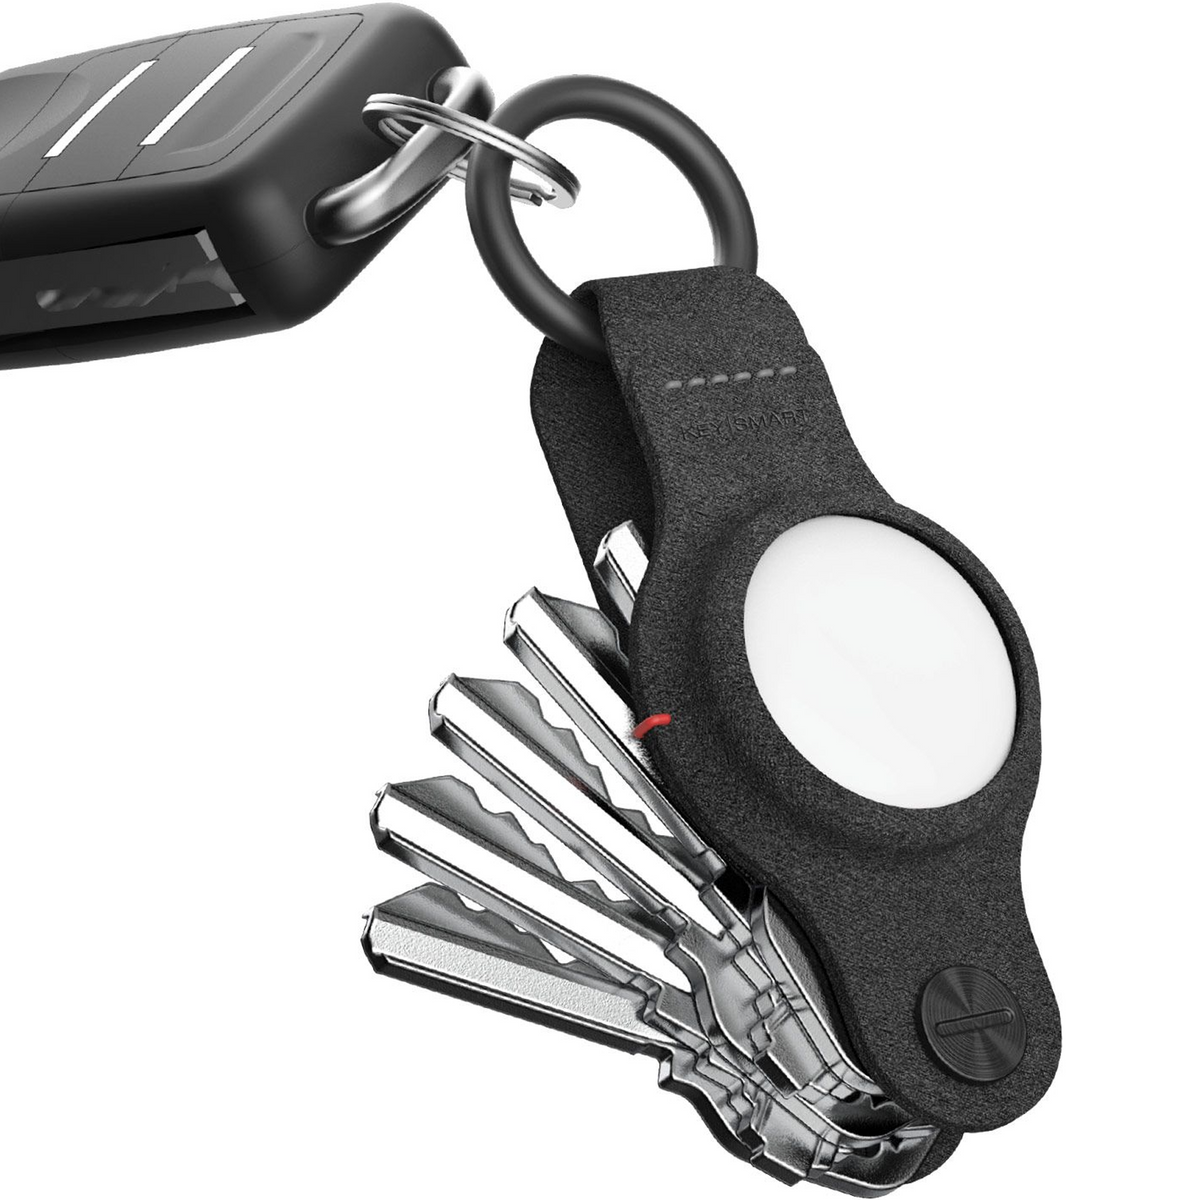 KeySmart X Black Aluminum Compact Keychain - 10-Year Anniversary Minimalist  Key Organizer and Holder